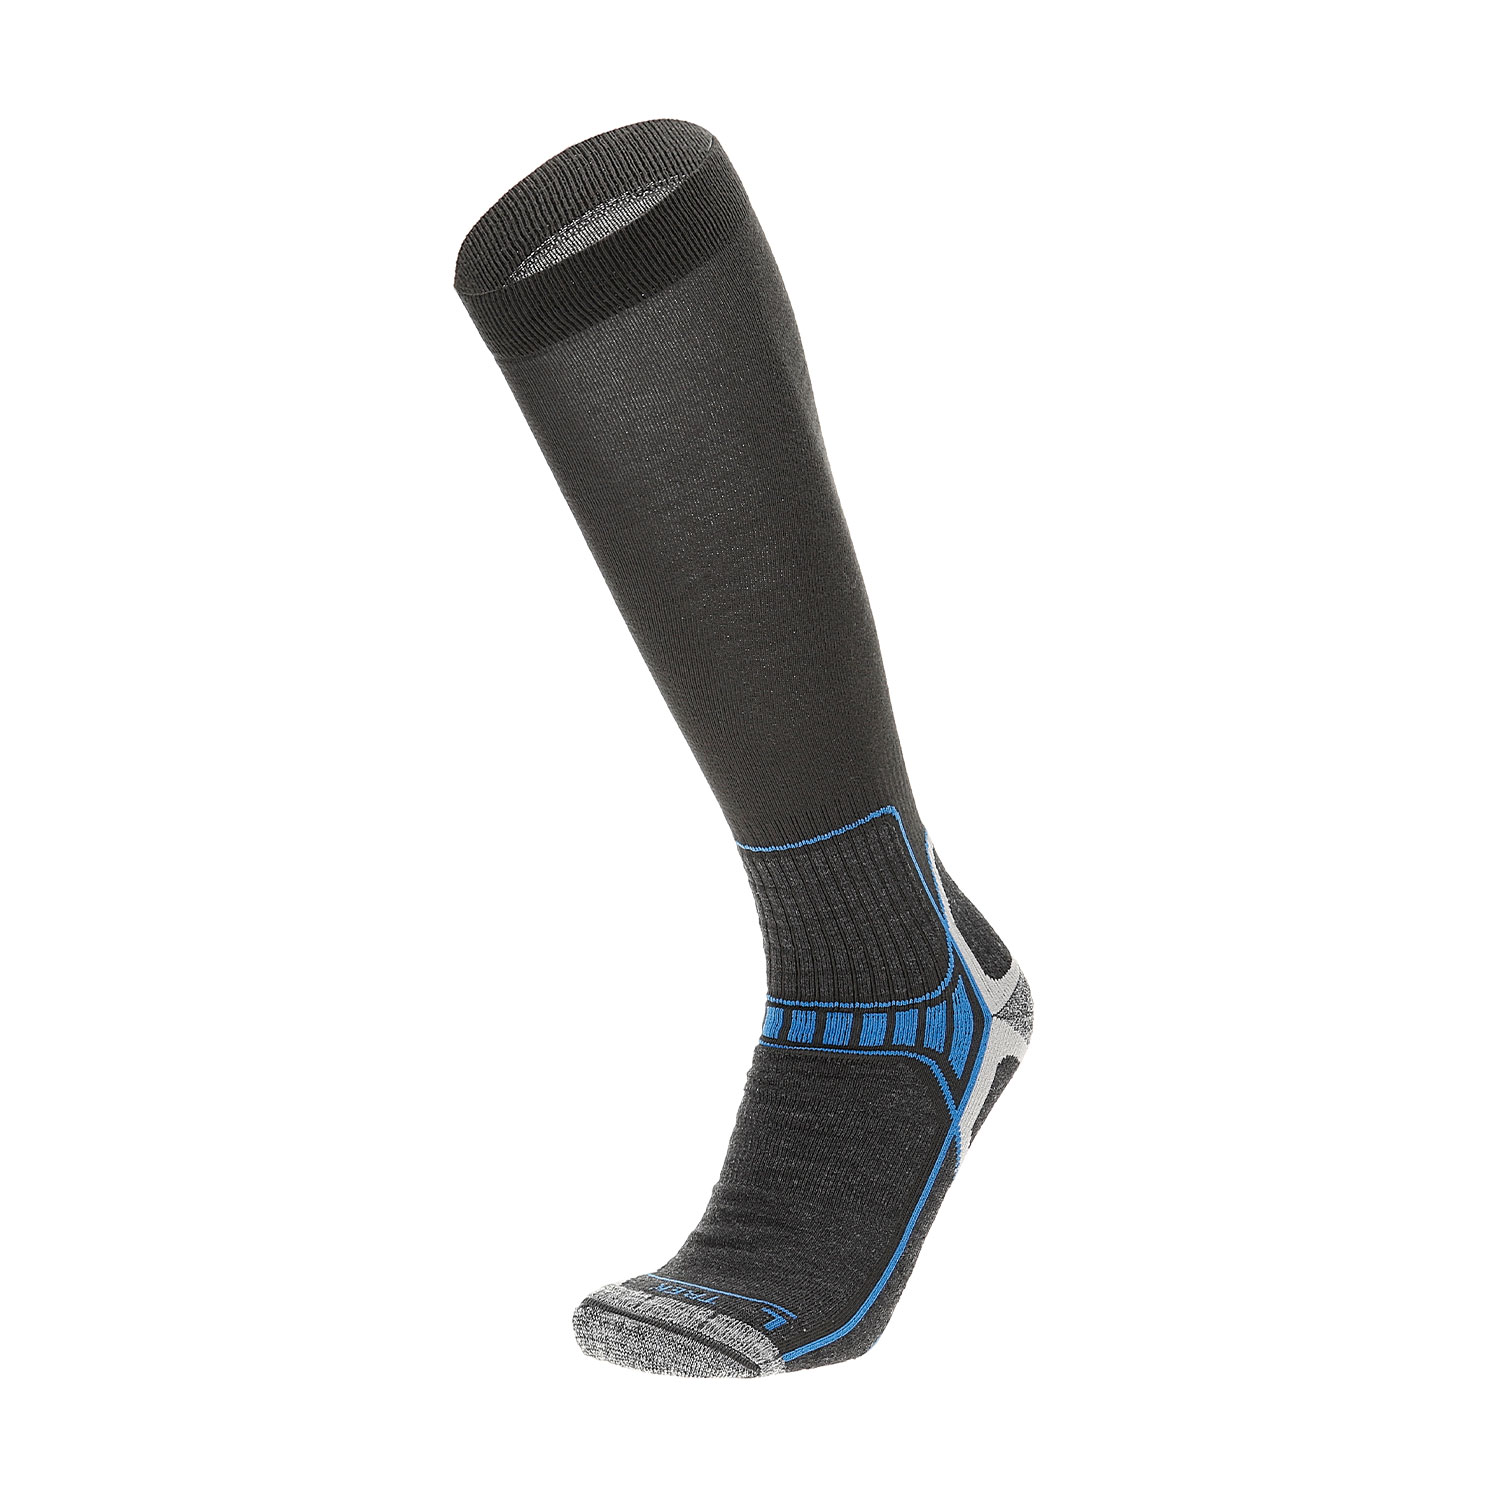 Mico X-Performance Light Weight Hiking Socks - Antracite/Cobalto